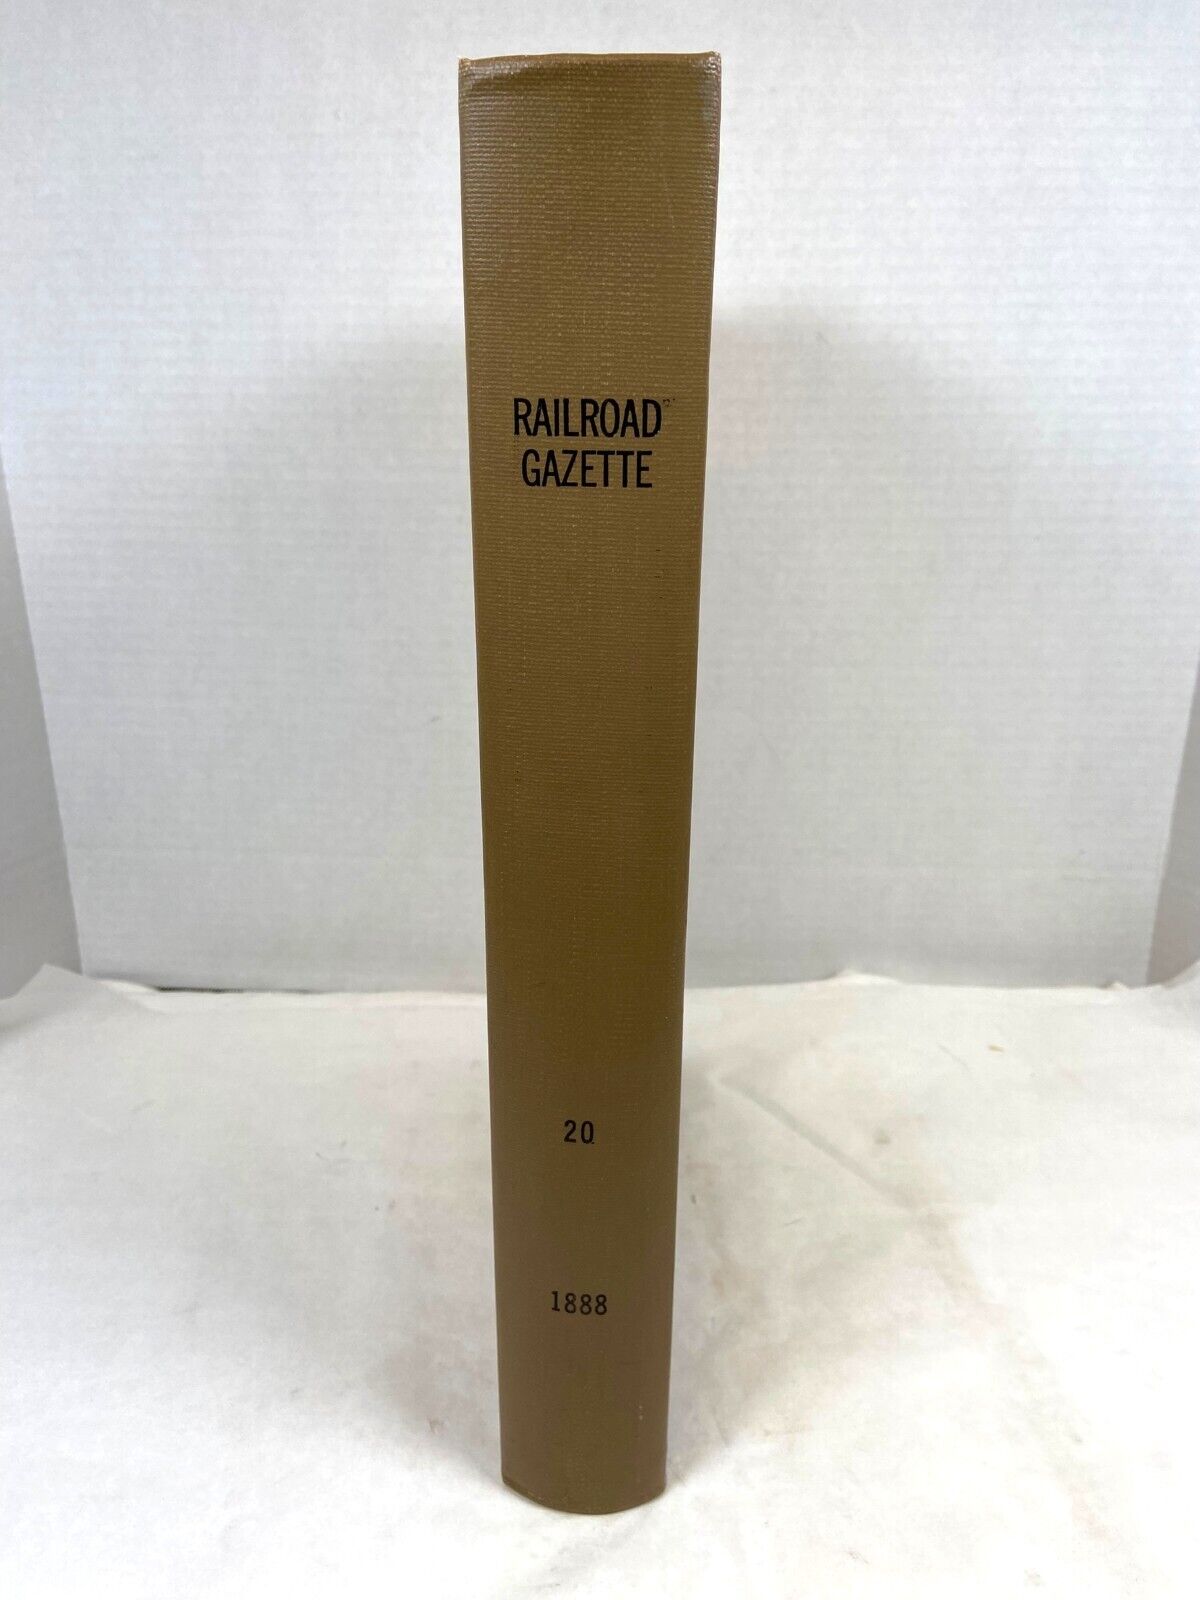 Rare 1888 Volume 20 RAILROAD GAZETTE - Jan 1, 1888 to Dec 31, 1888 - OP HB RB